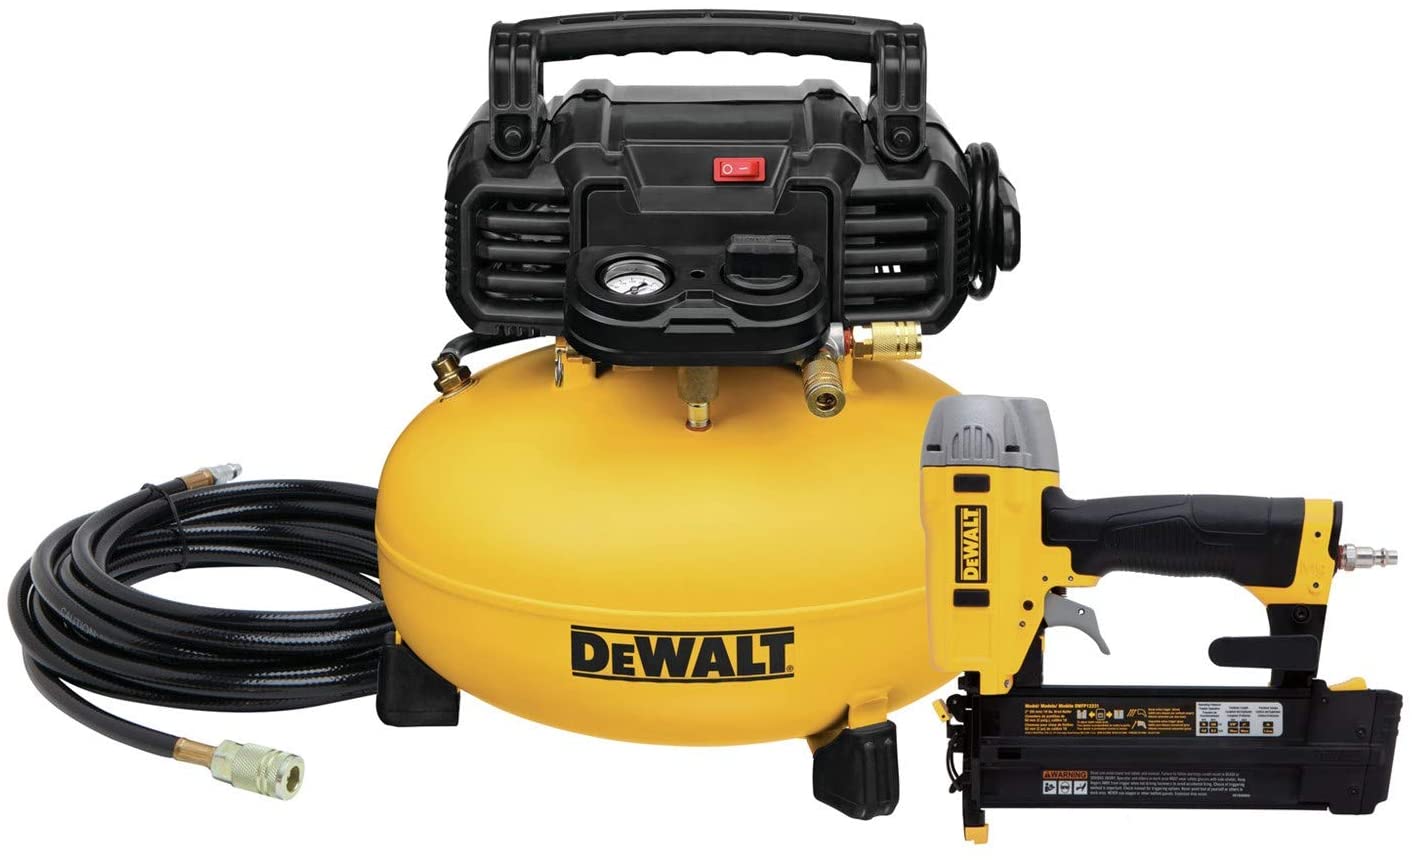 DEWALT 6 Gallon Compressor & Brad Nailer Combo Kit